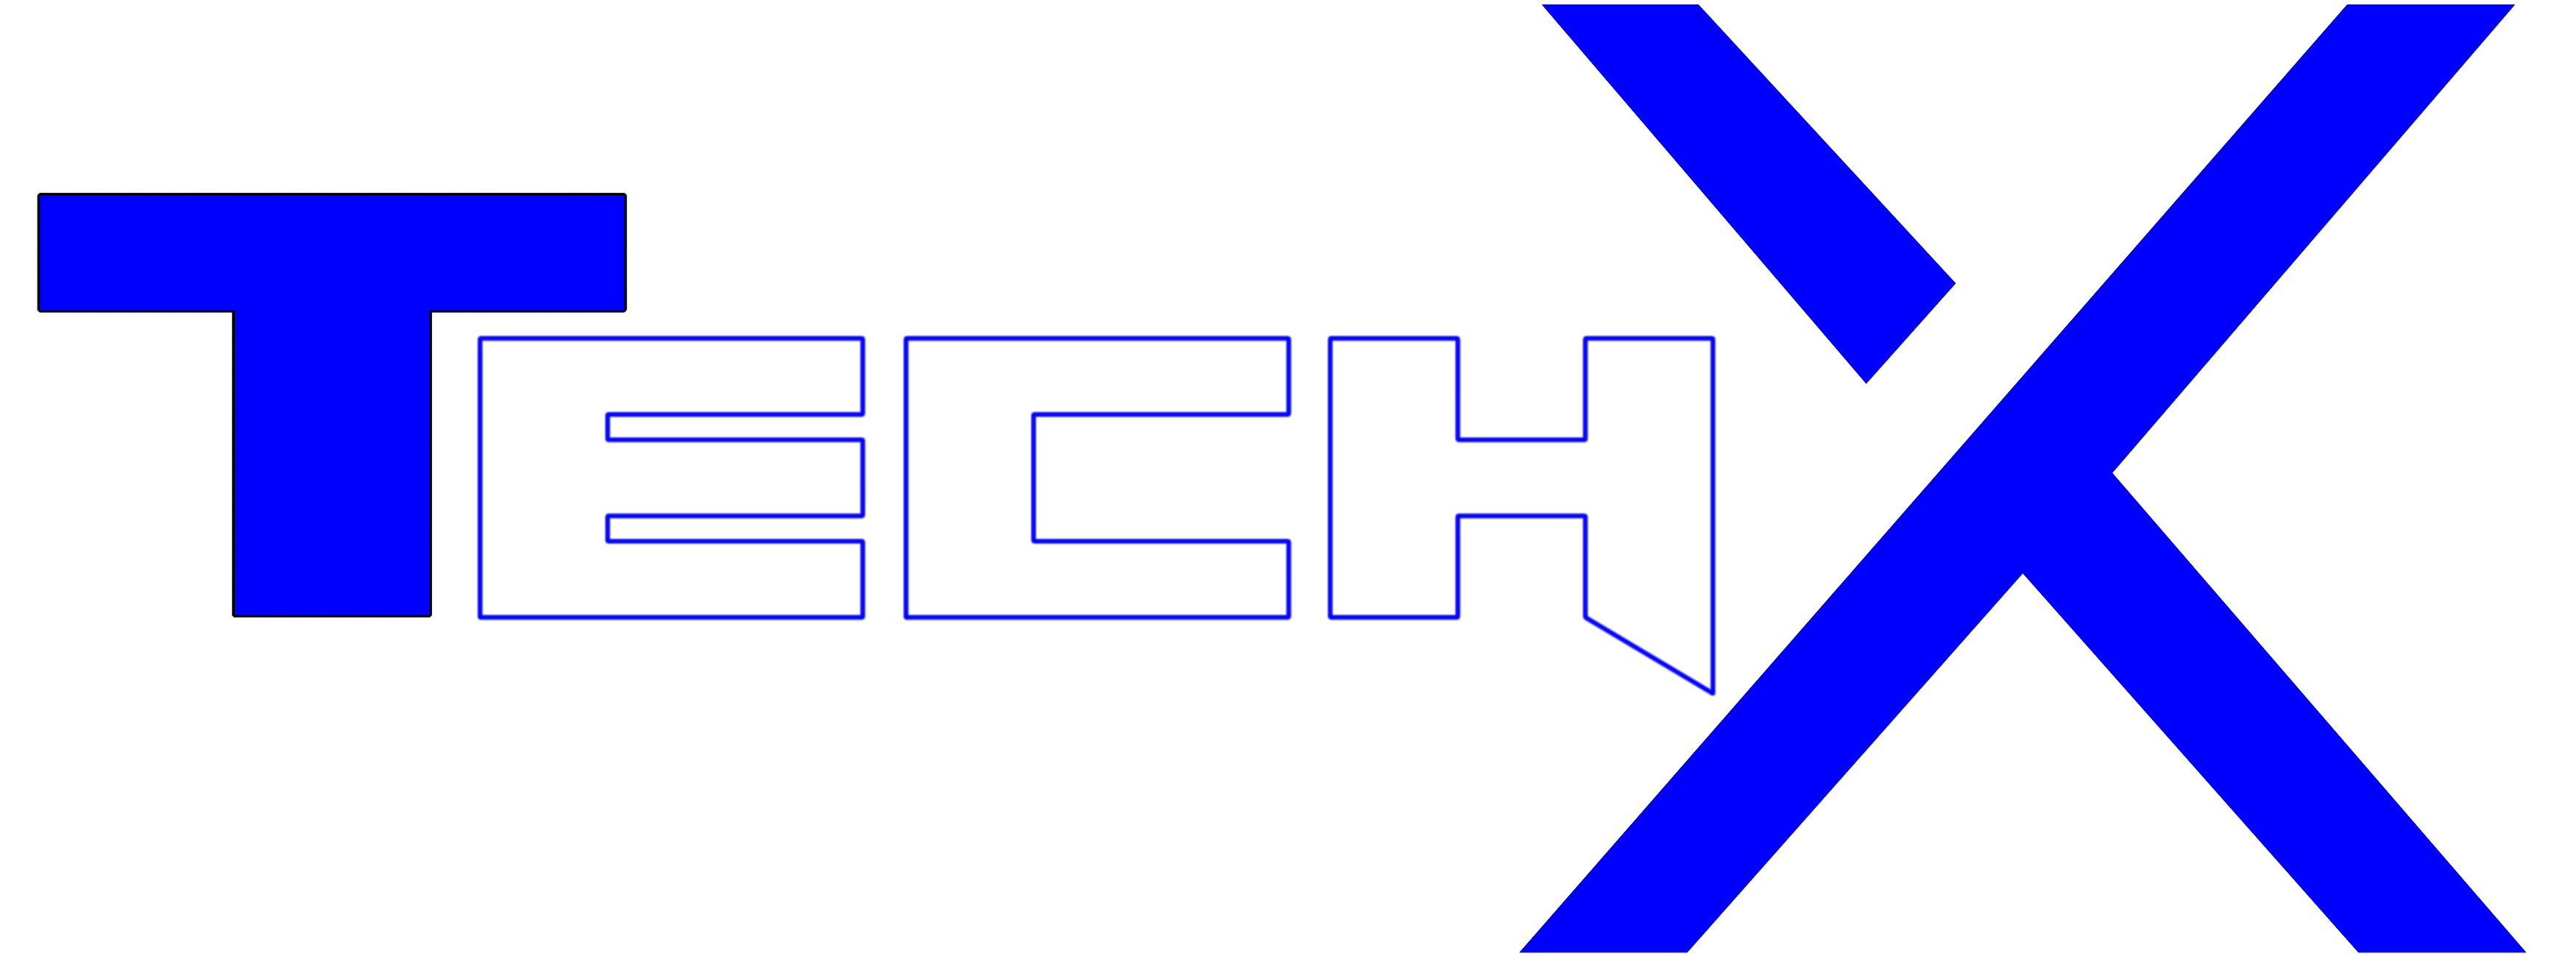 TechX